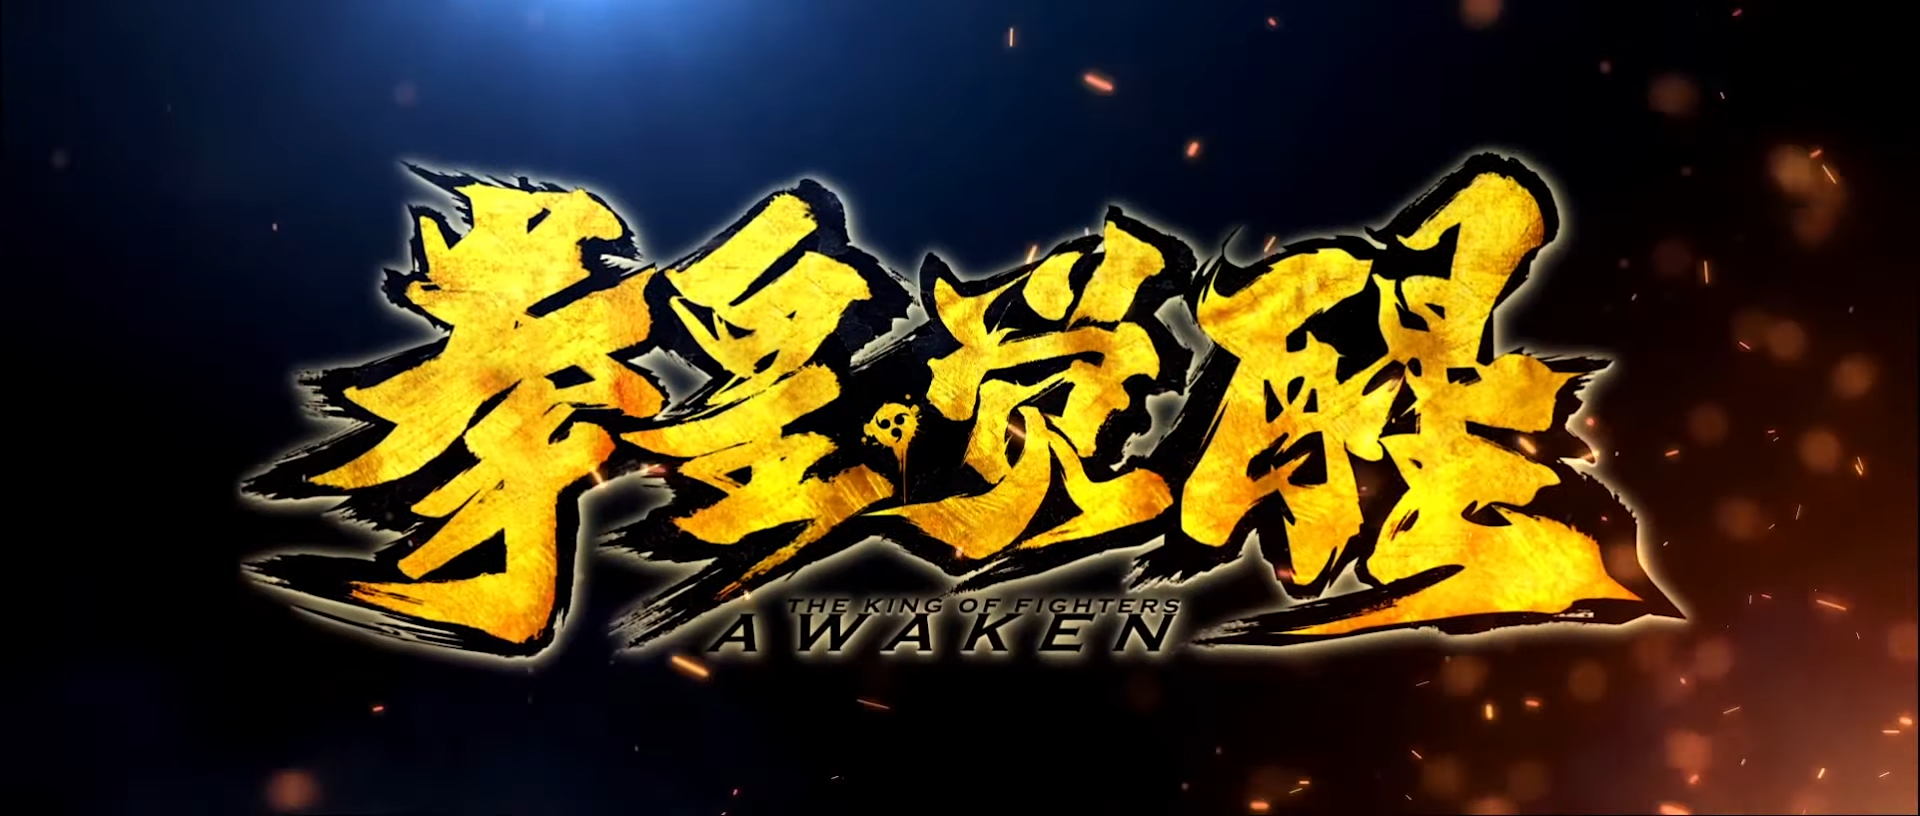 The King of Fighters Awaken: O Filme 